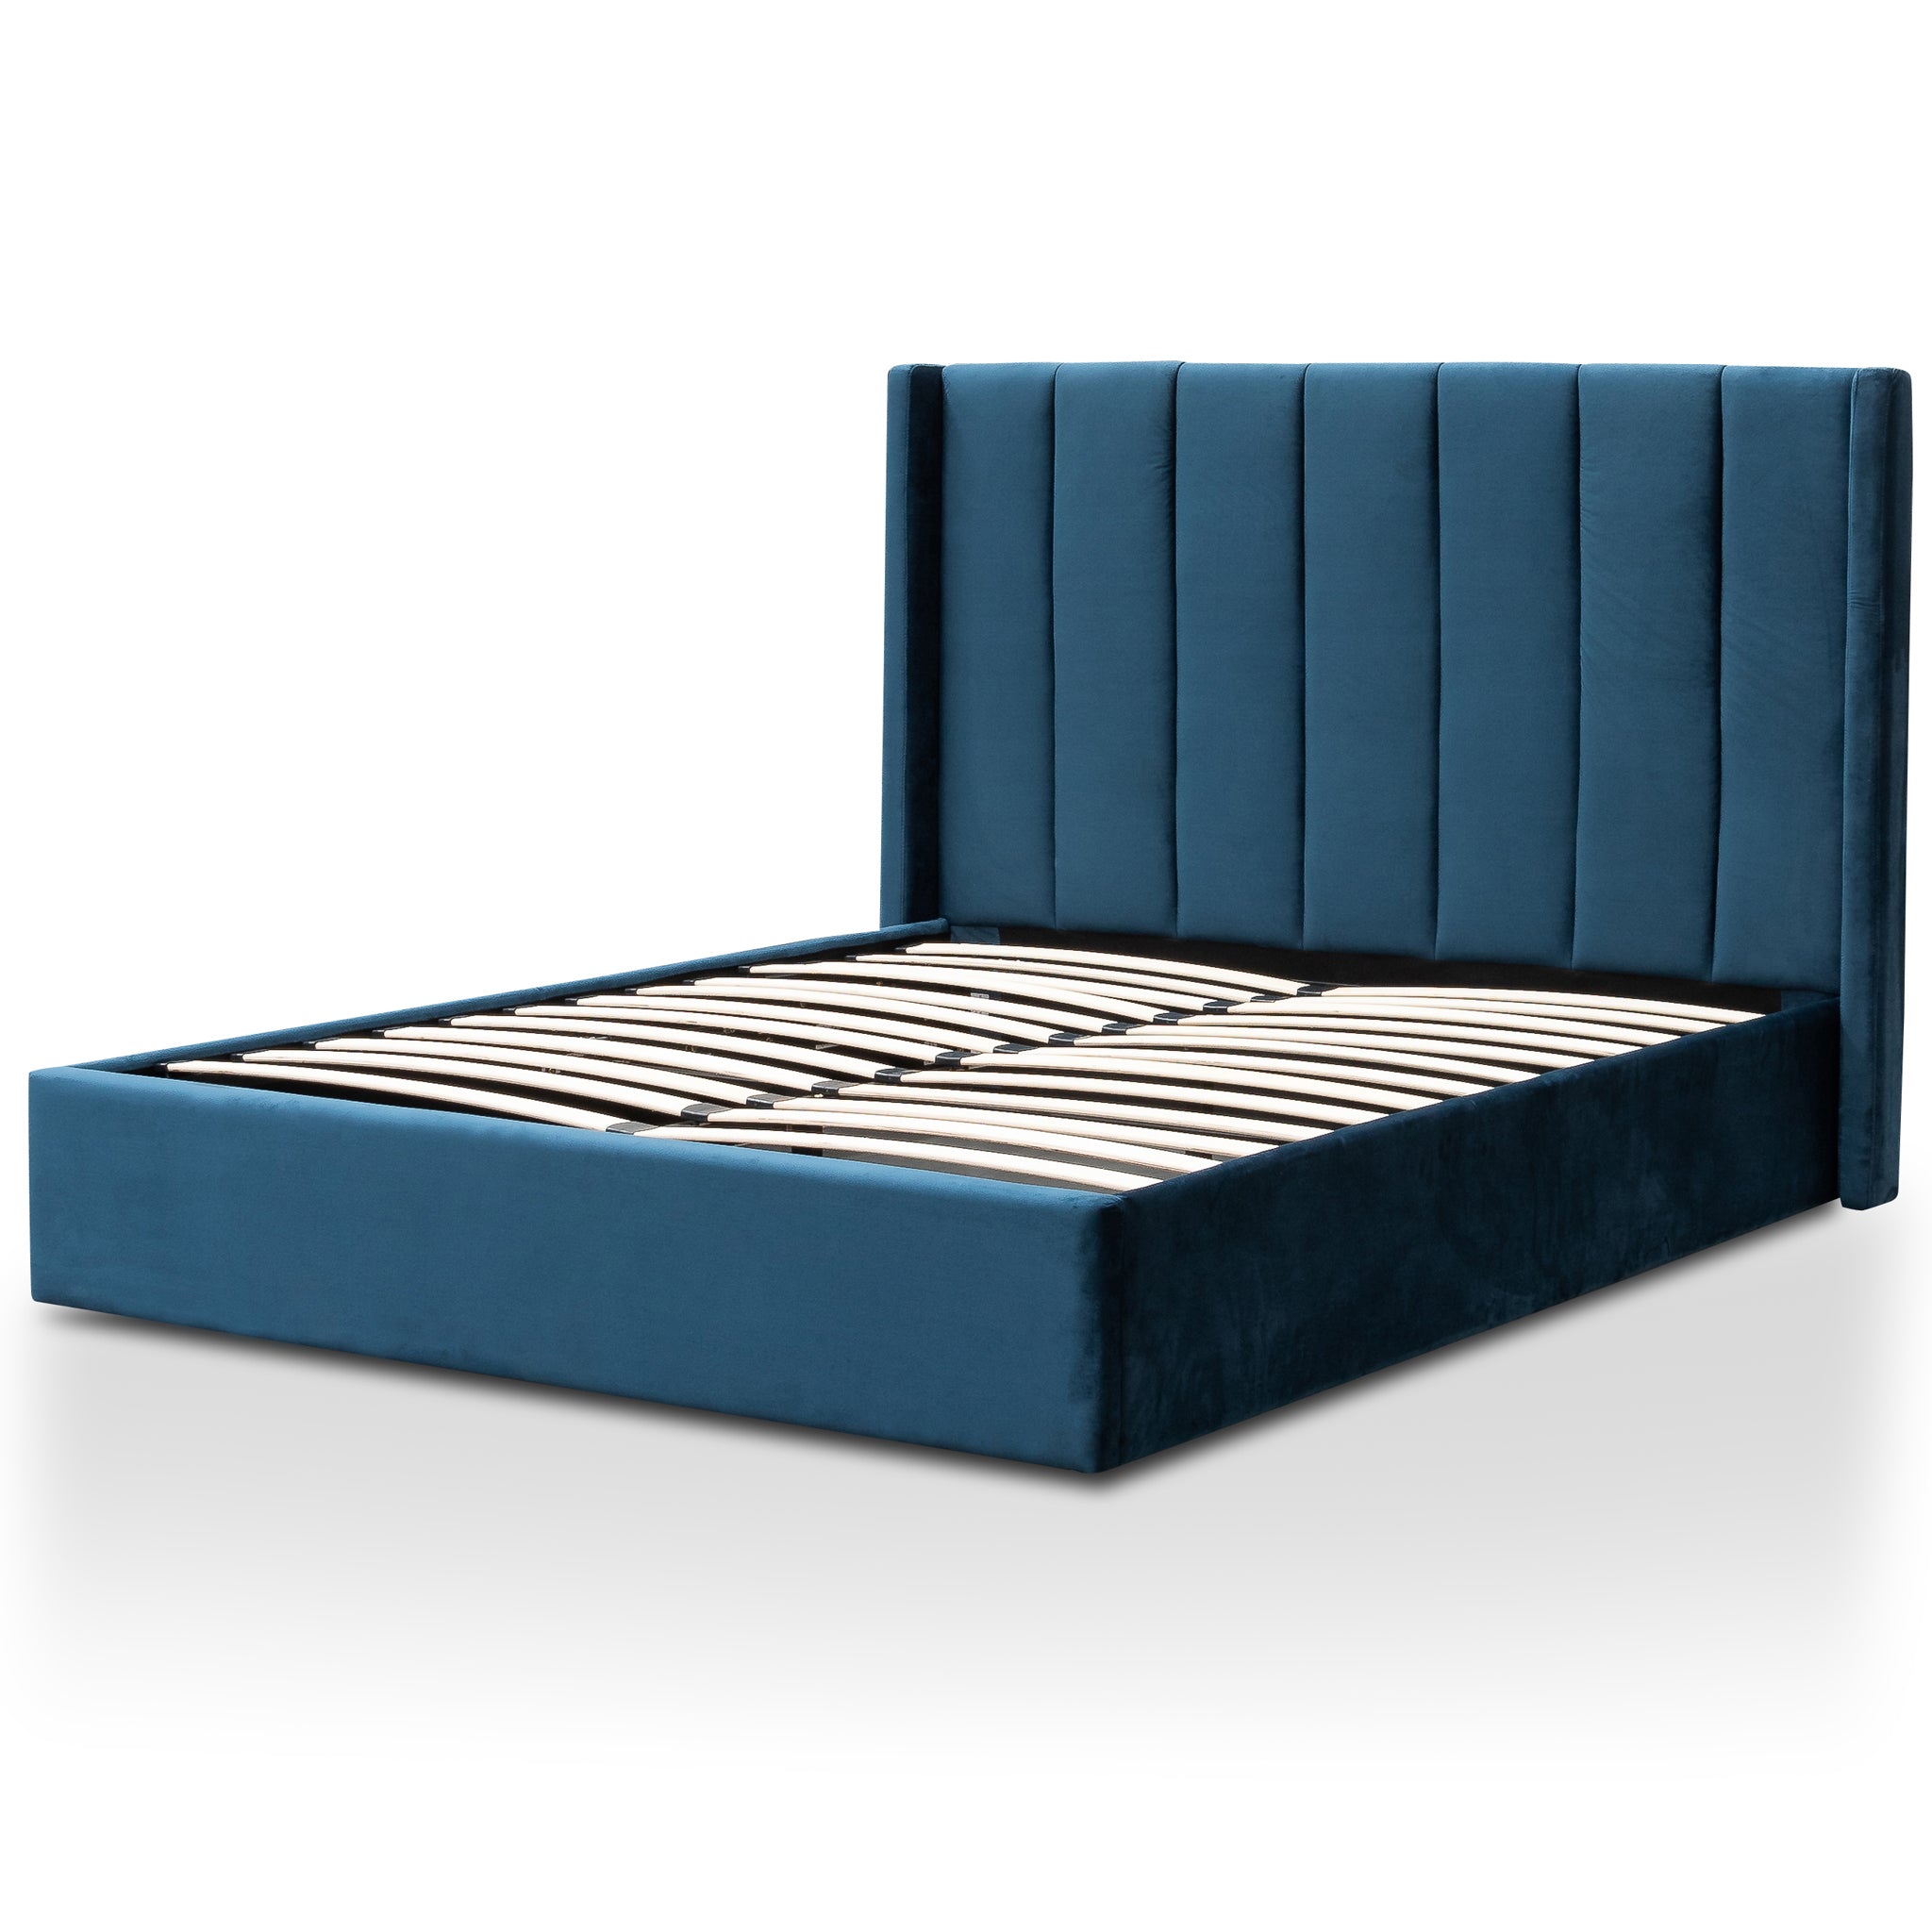 King Bed Frame – Teal Navy Velvet with Storage